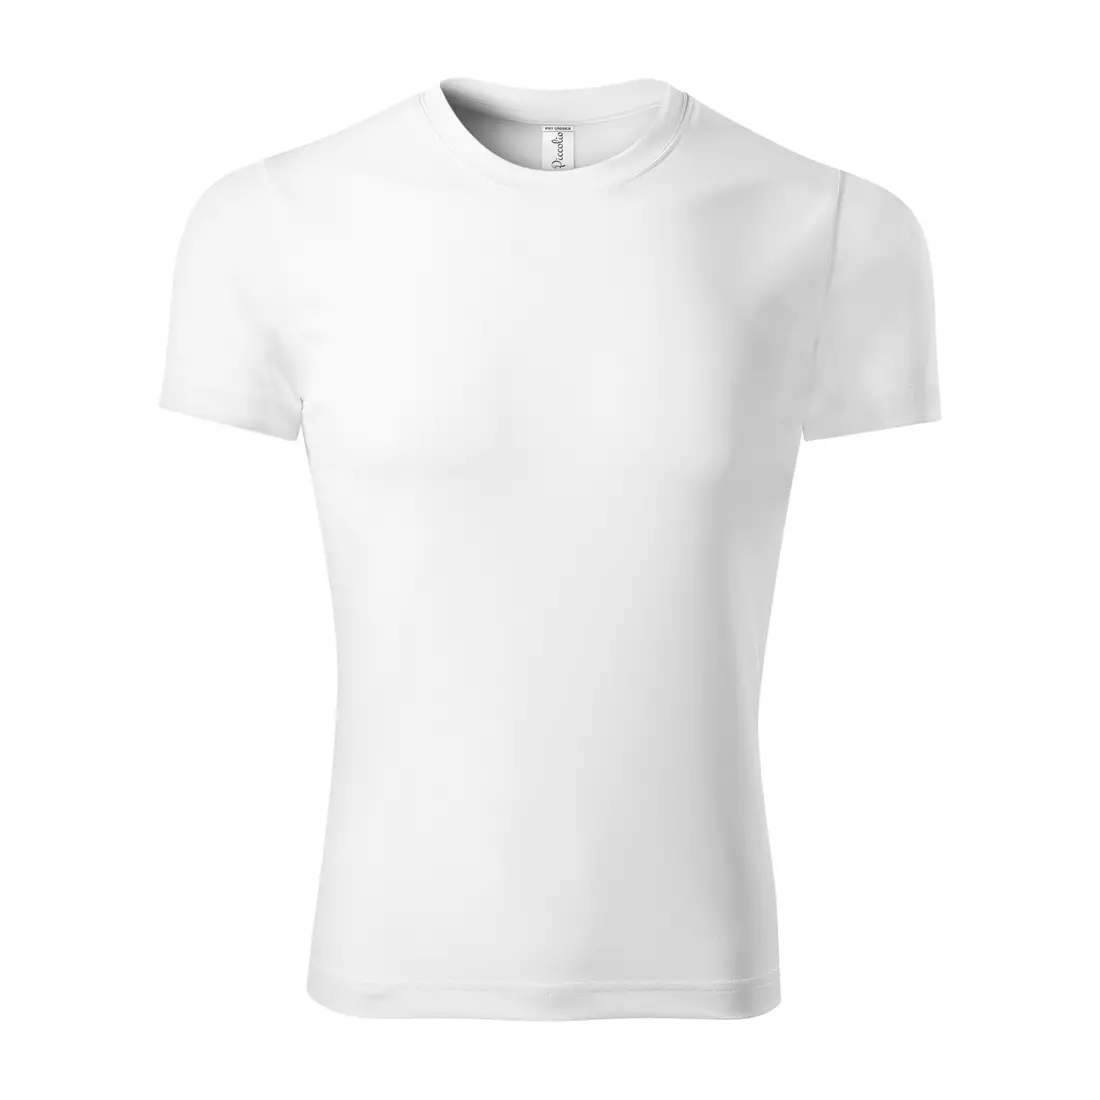 PICCOLIO PIXEL Sport T-Shirt, Short Sleeve, Men's, White, 100% Polyester P810012